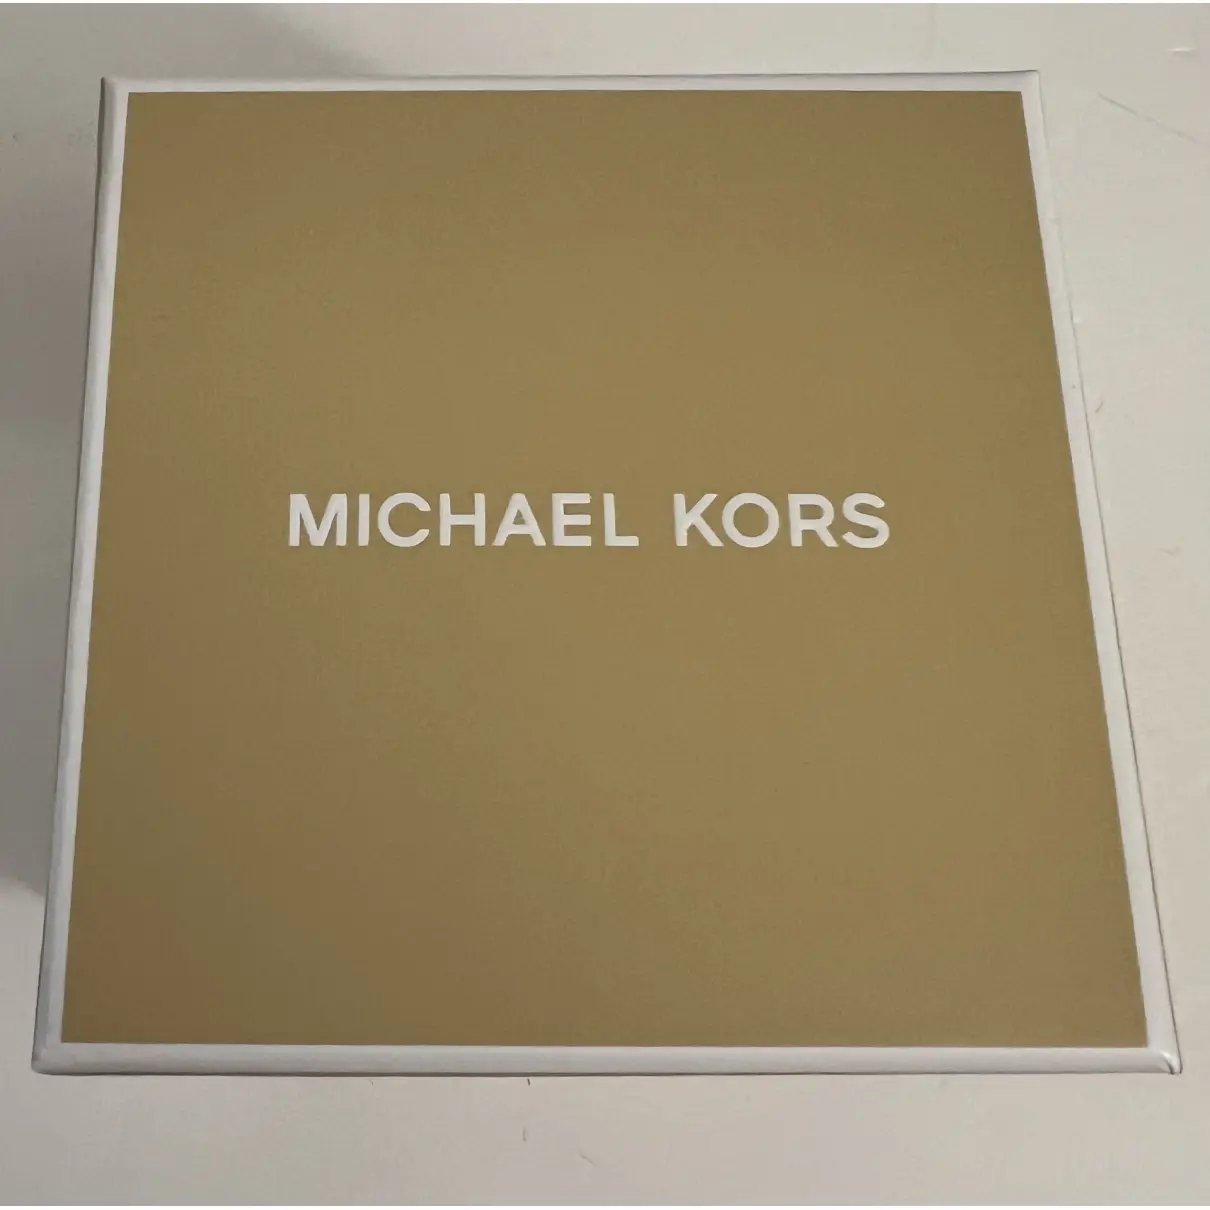 Crystal bracelet Michael Kors